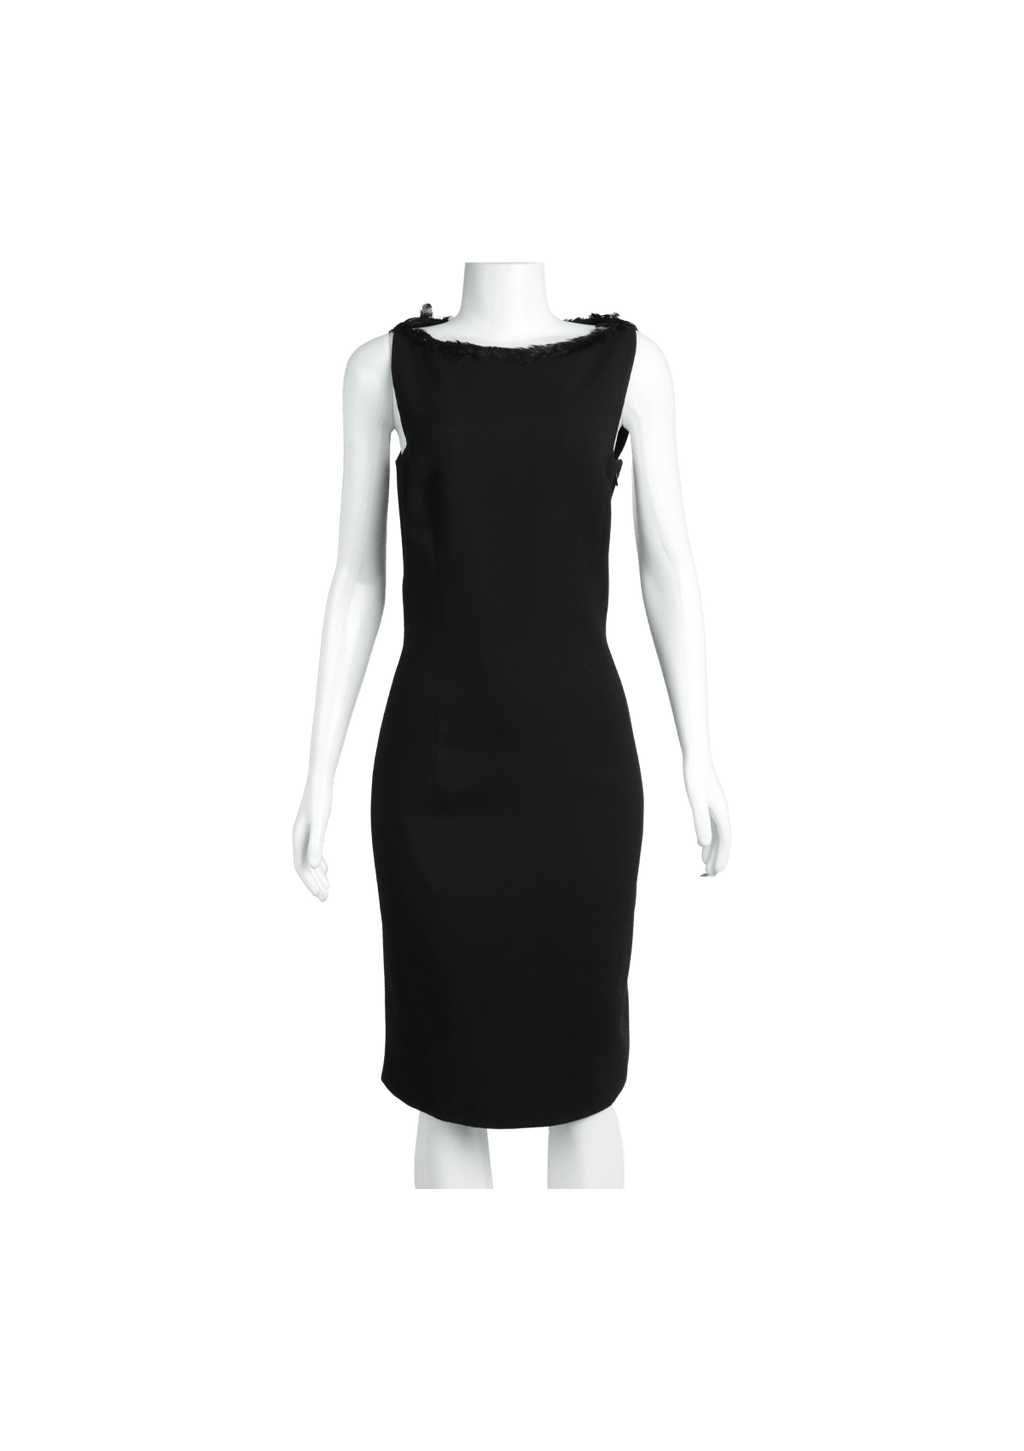 Dress & Go, Vestido Alexa - DG38/38